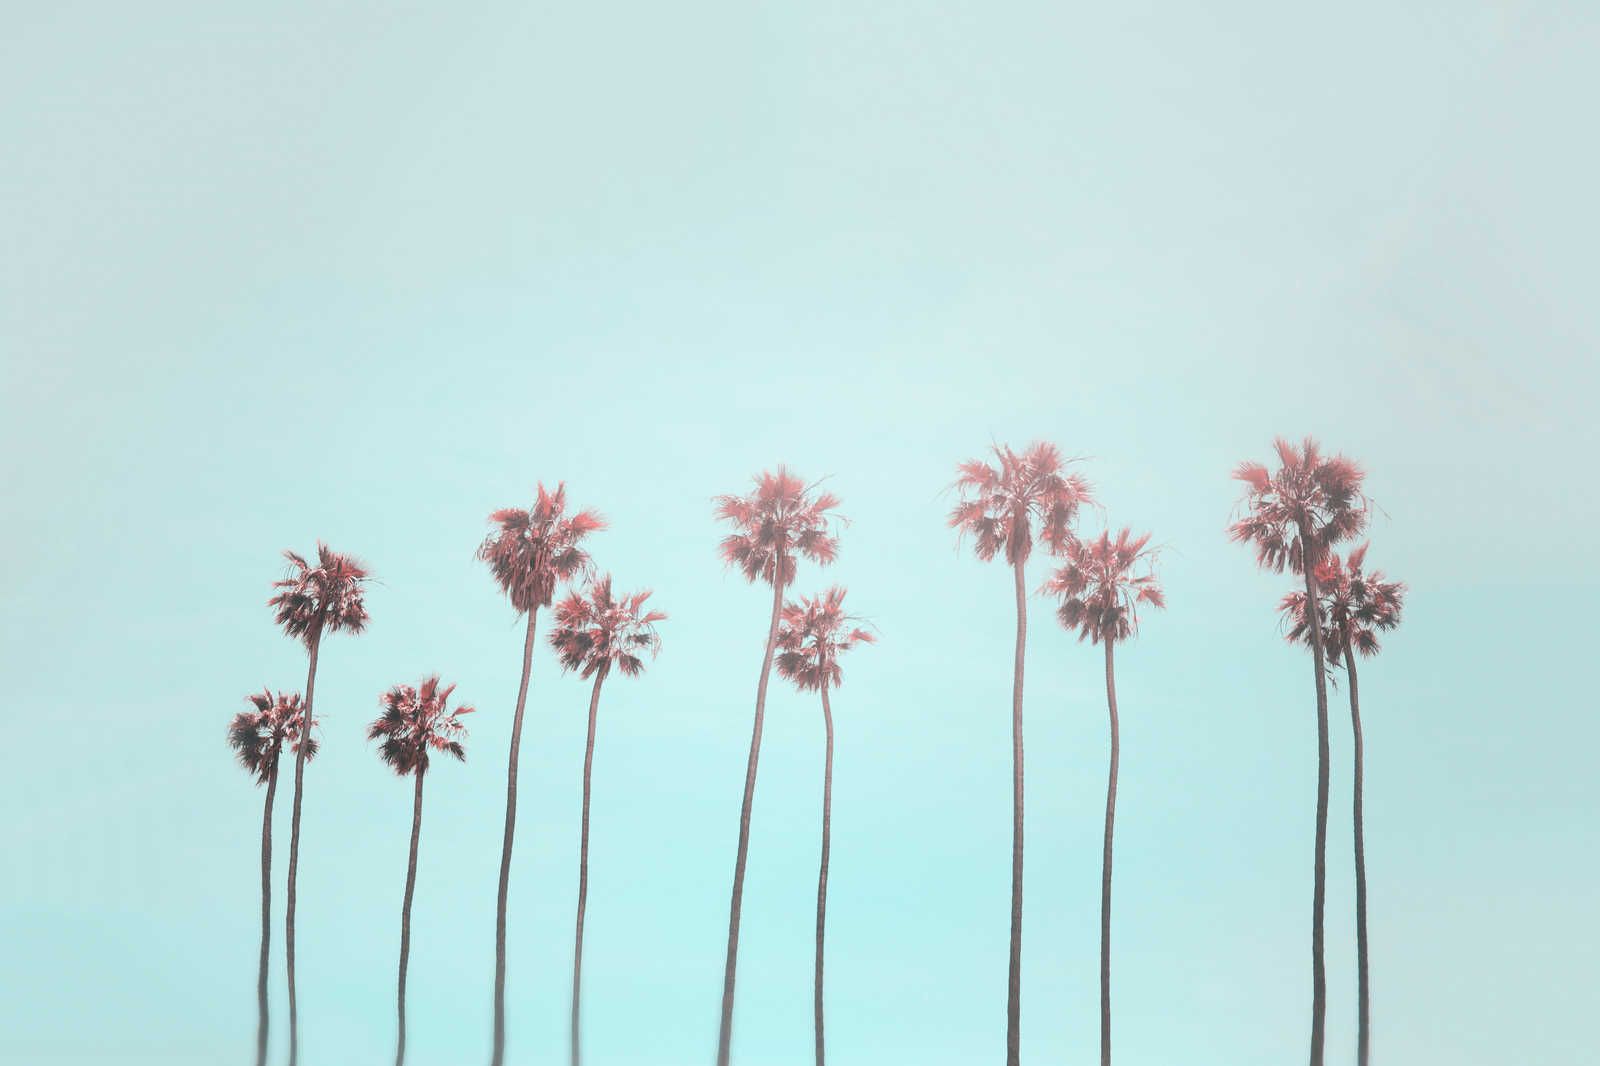             Leinwandbild Palmen & Himmel für Strandfeeling in Türkis & Pink – 0,90 m x 0,60 m
        